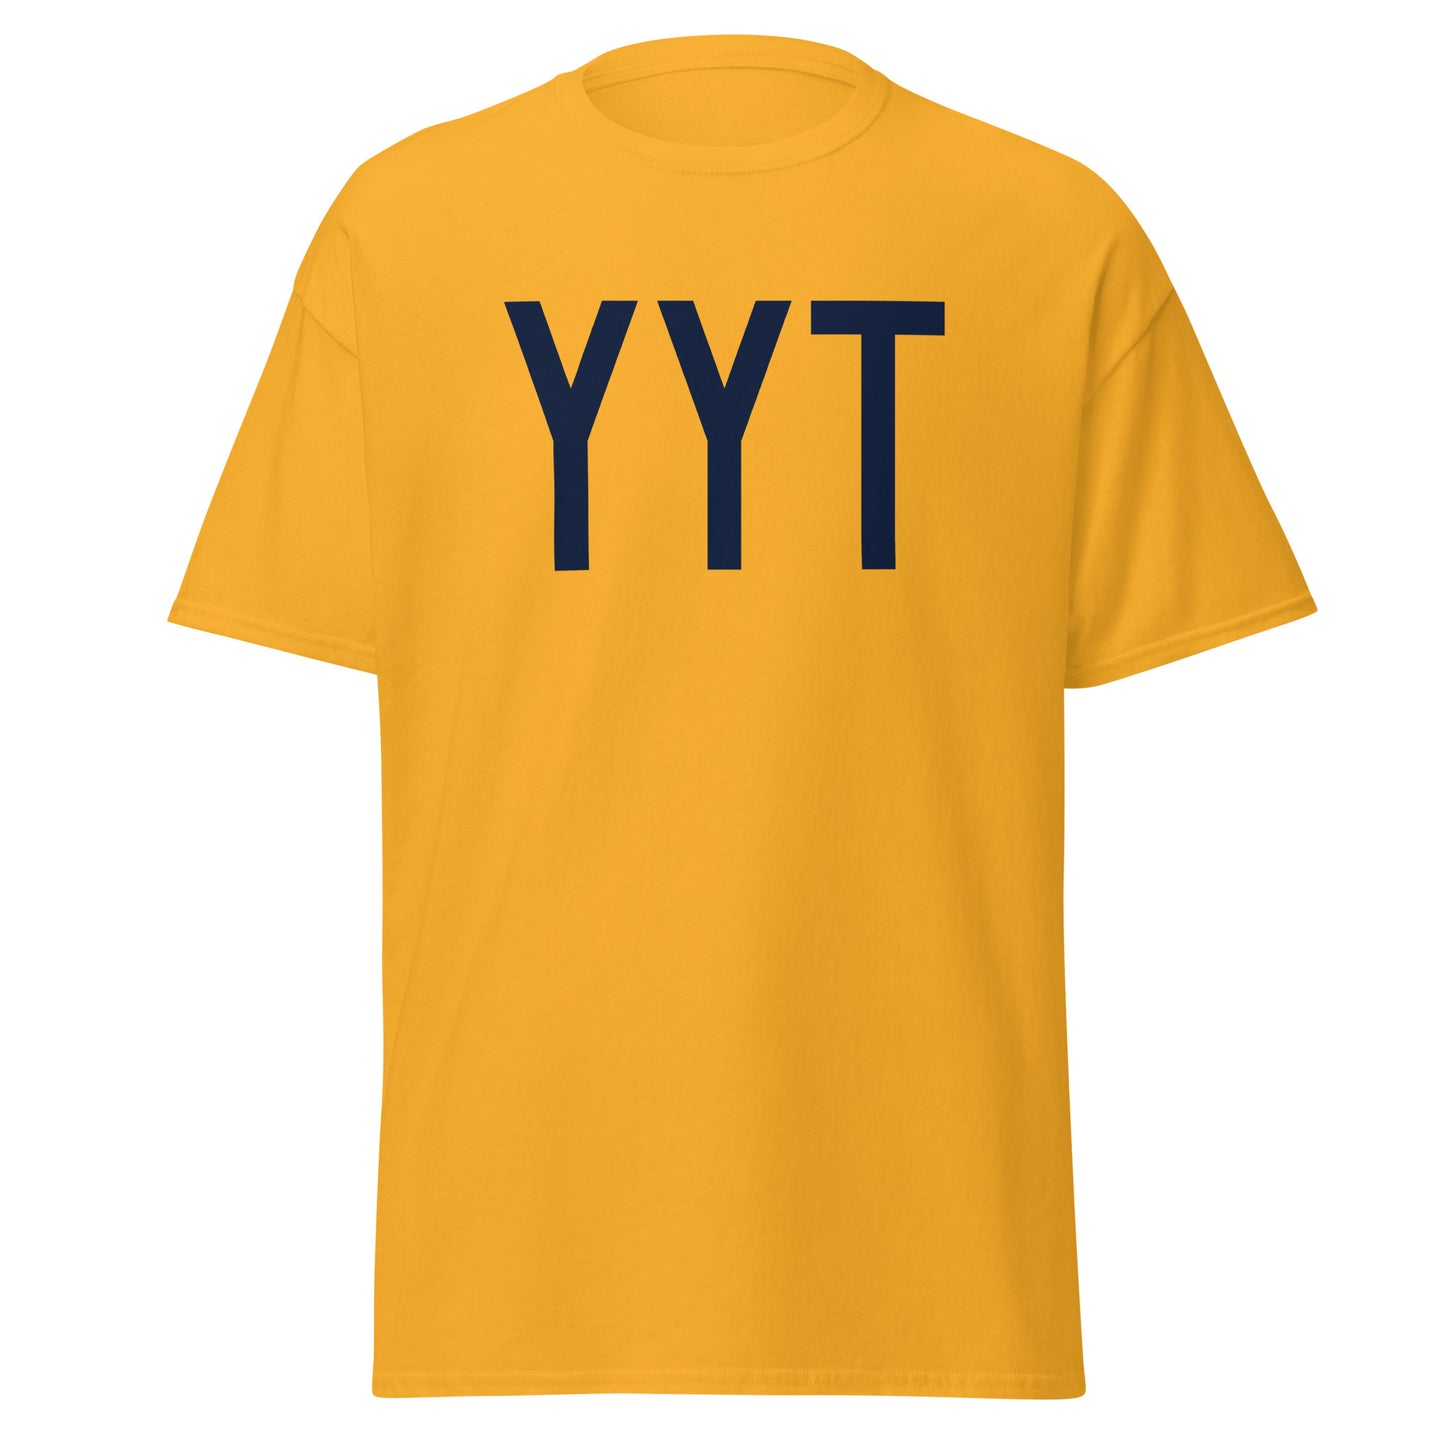 Aviation-Theme Men's T-Shirt - Navy Blue Graphic • YYT St. John's • YHM Designs - Image 05